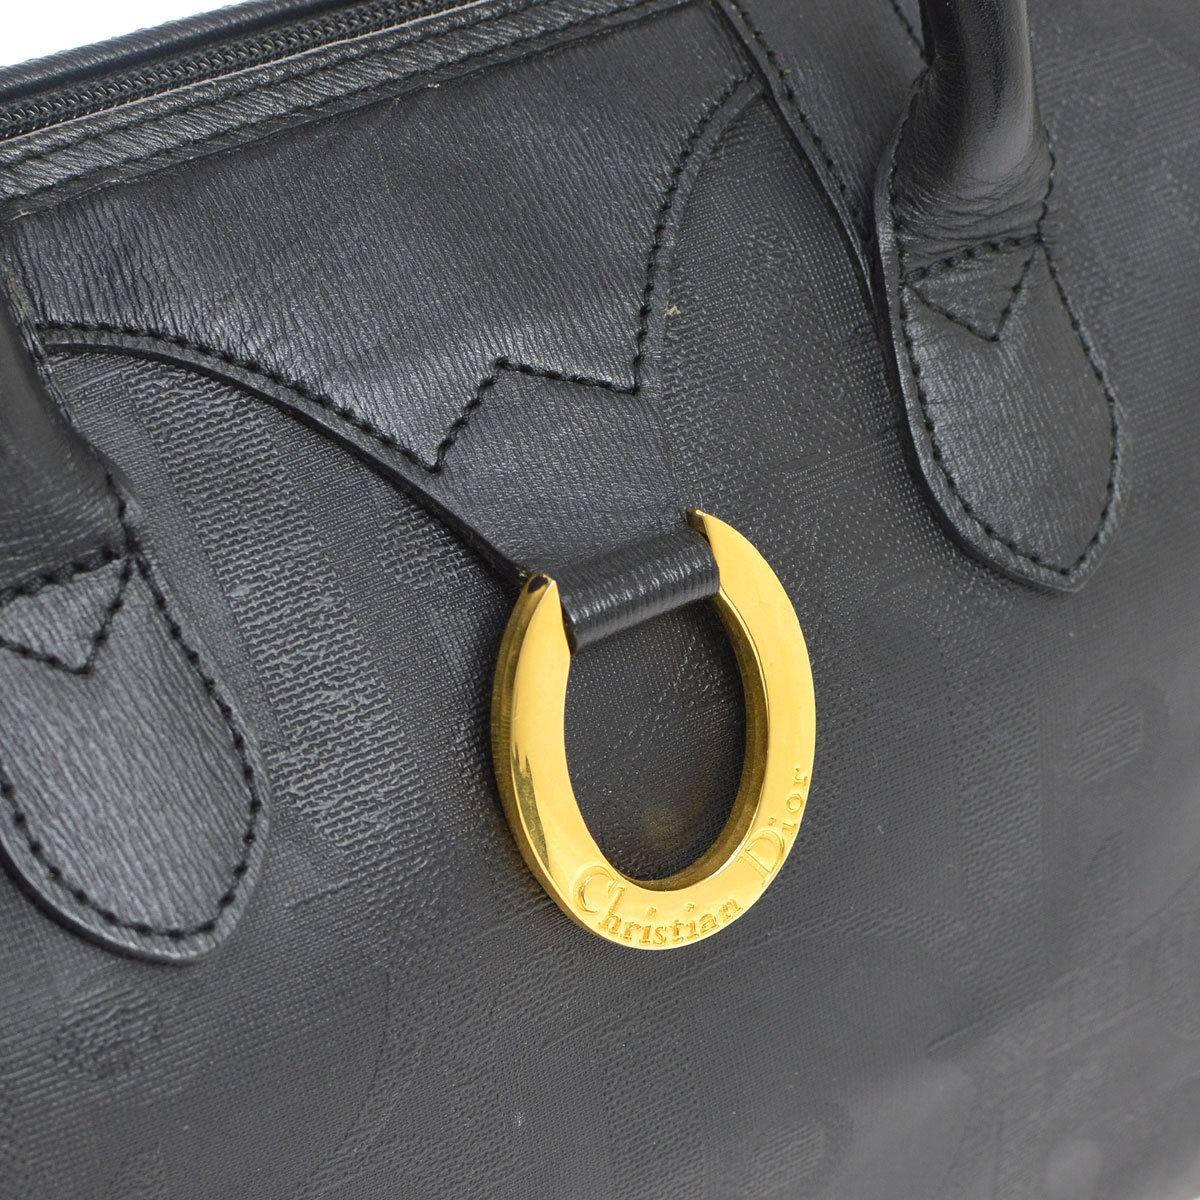 Christian Dior Black Monogram Canvas Logo Satchel Speedy Top Handle Bag

Monogram canvas
Leather trim
Gold tone hardware
Zipper closure
Woven lining 
Made in France
Handle drop 3.5